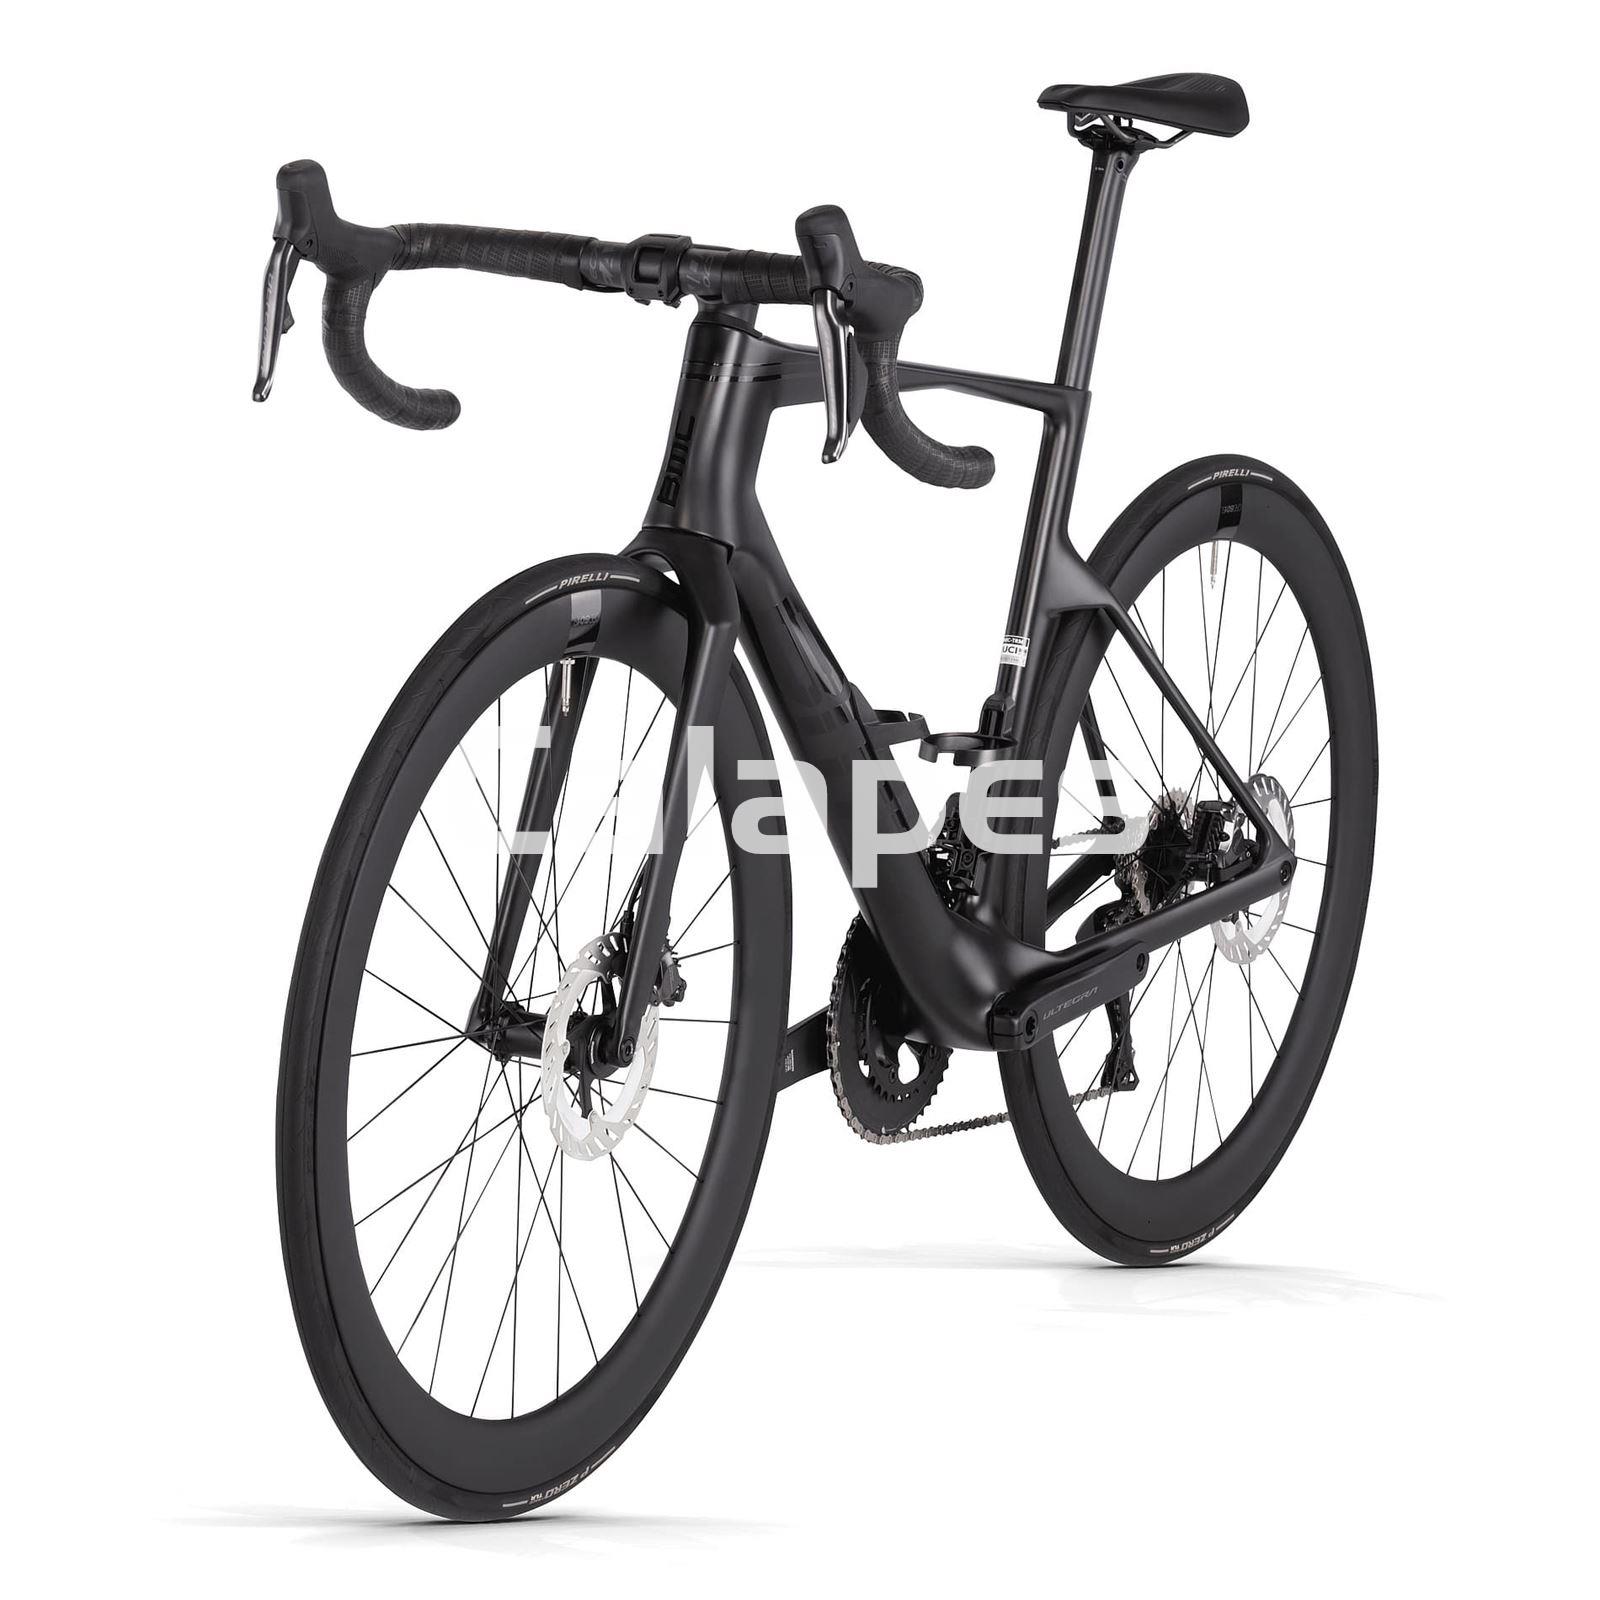 Bicicleta Teammachine R 01 FOUR Shimano Ultegra Di2 12v - Imagen 3